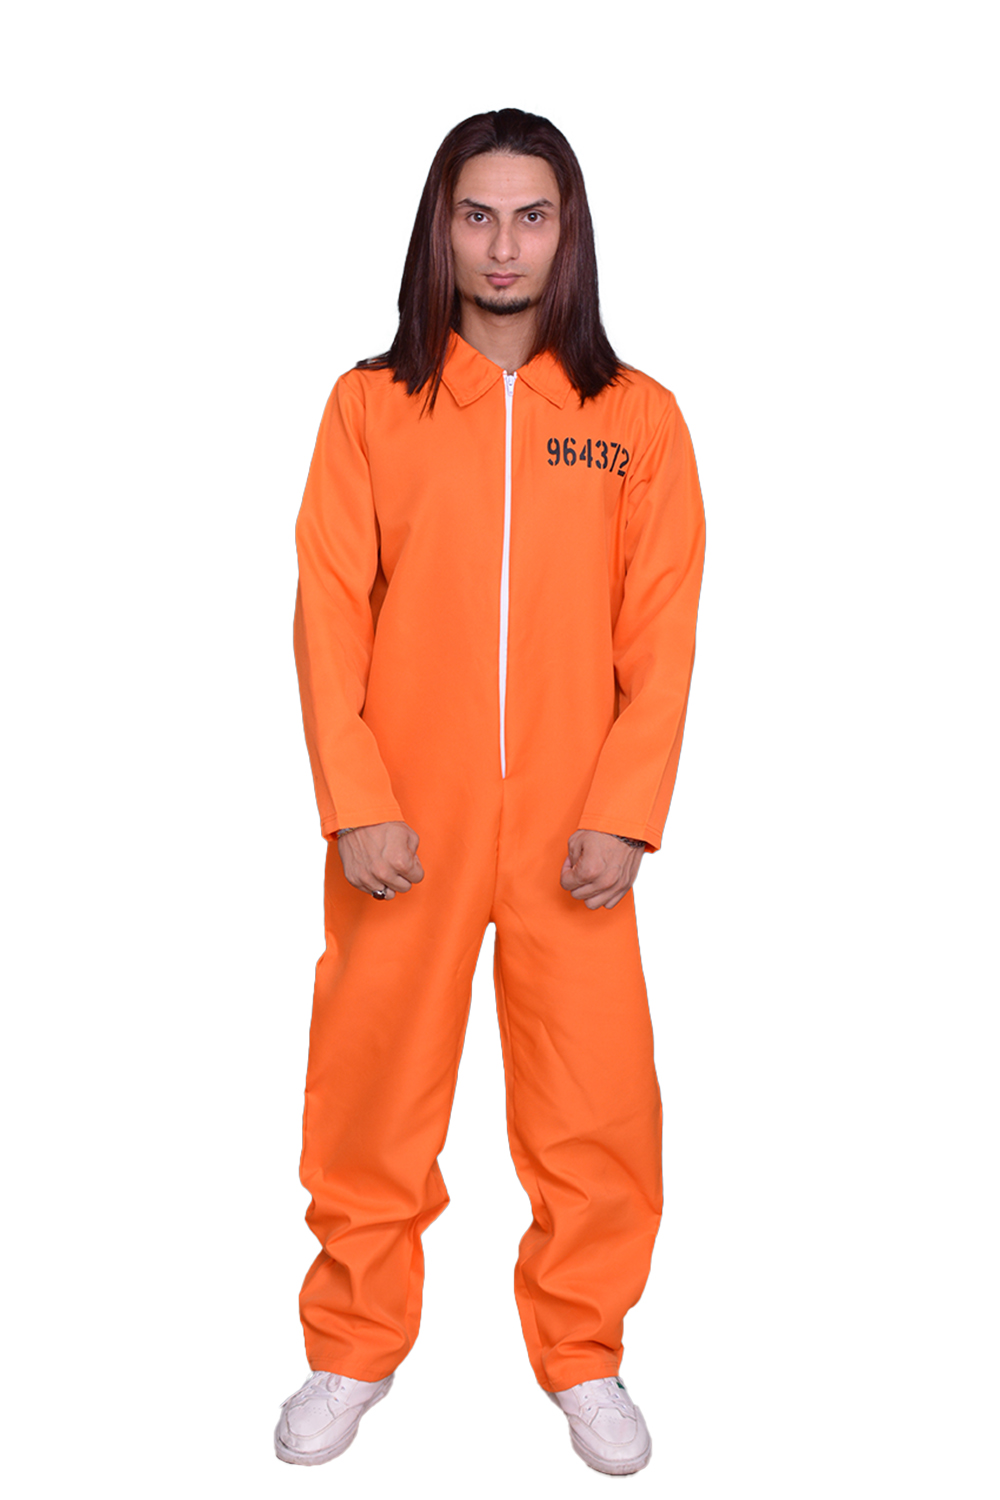 Wickedfun Men's Orange Prisoner Coverall Jumpsuit